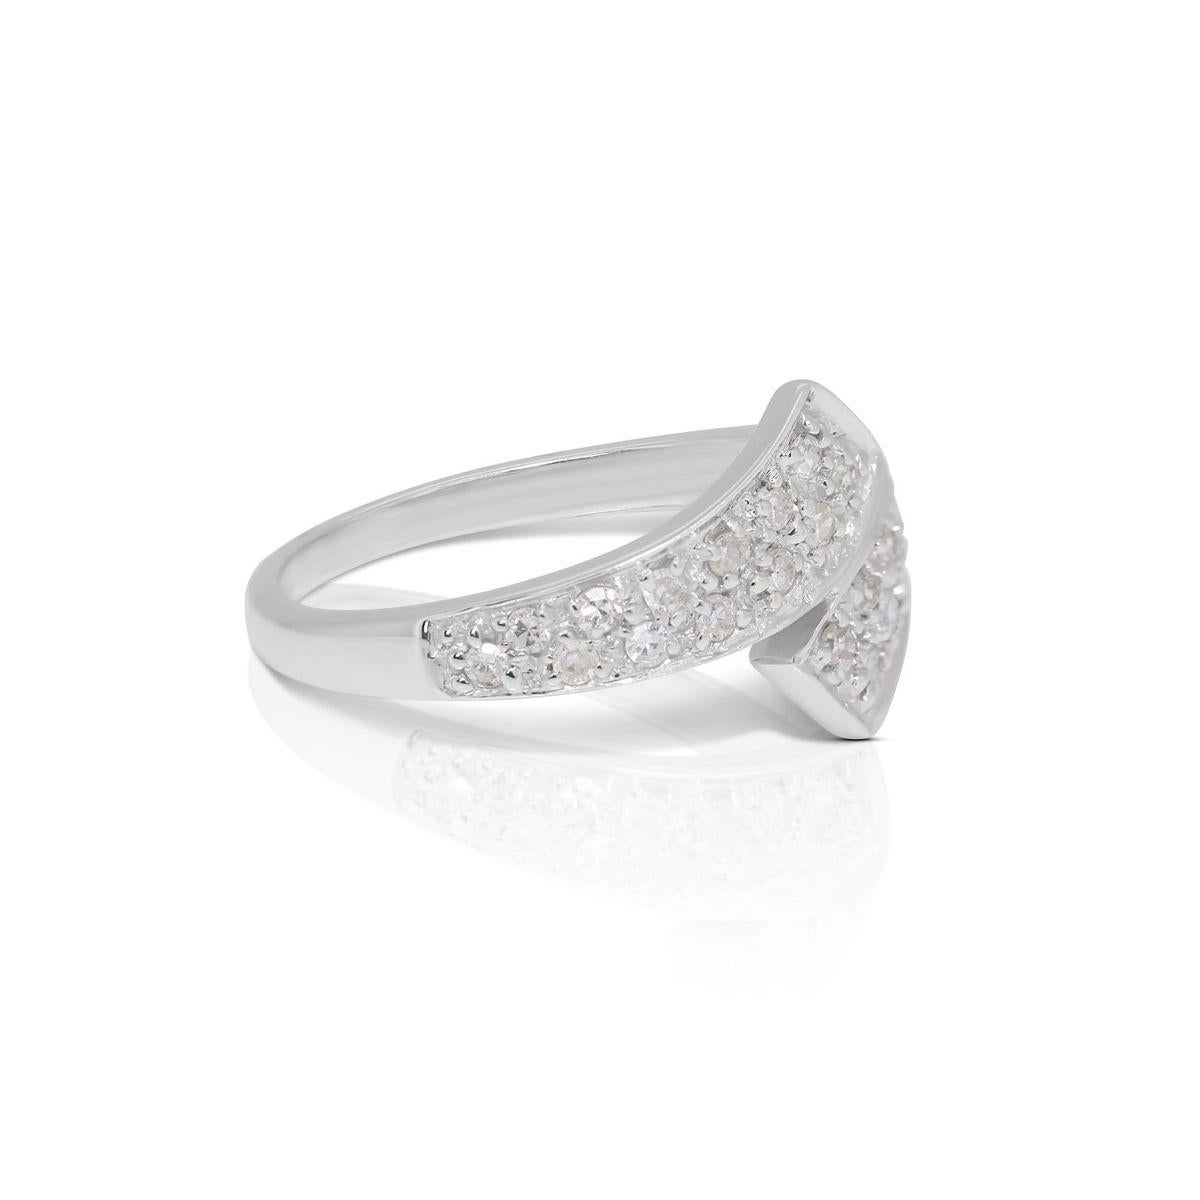 Women's or Men's Lovely 18K White Gold Diamond Ring with 0.26ct Natural Diamond For Sale